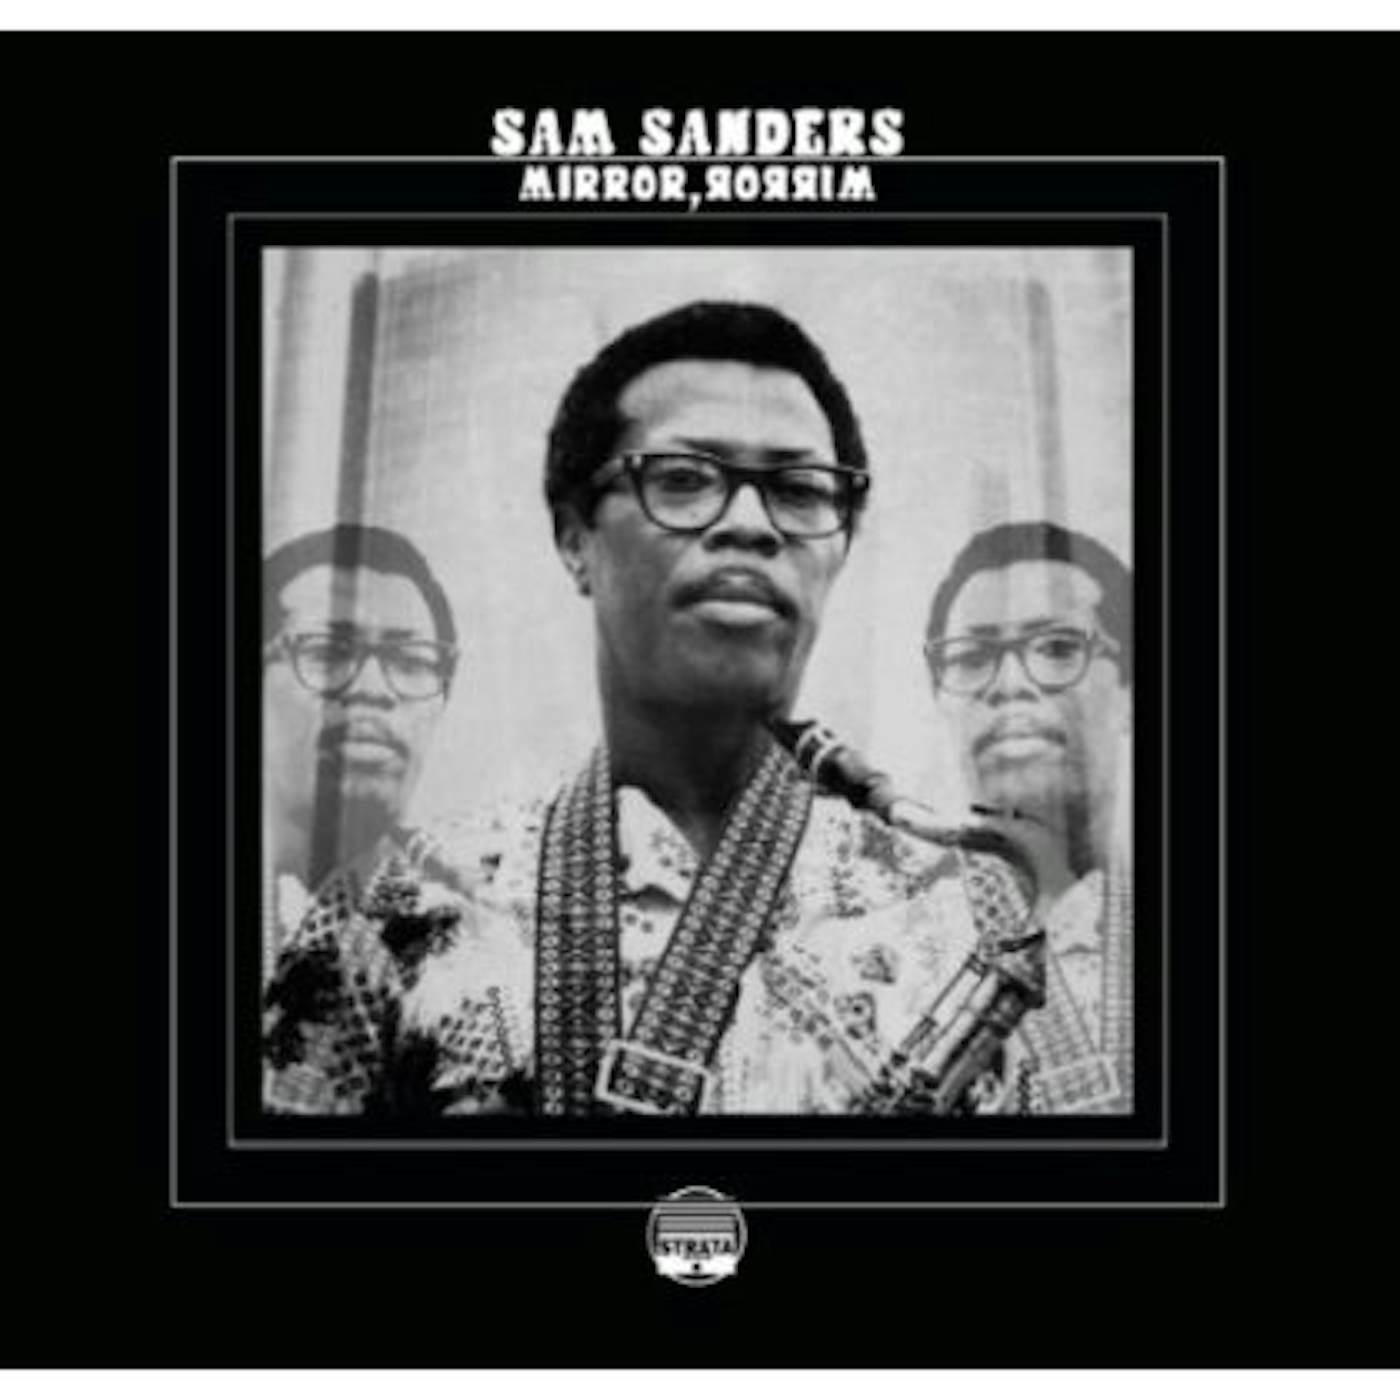 Sam Sanders MIRROR MIRROR CD